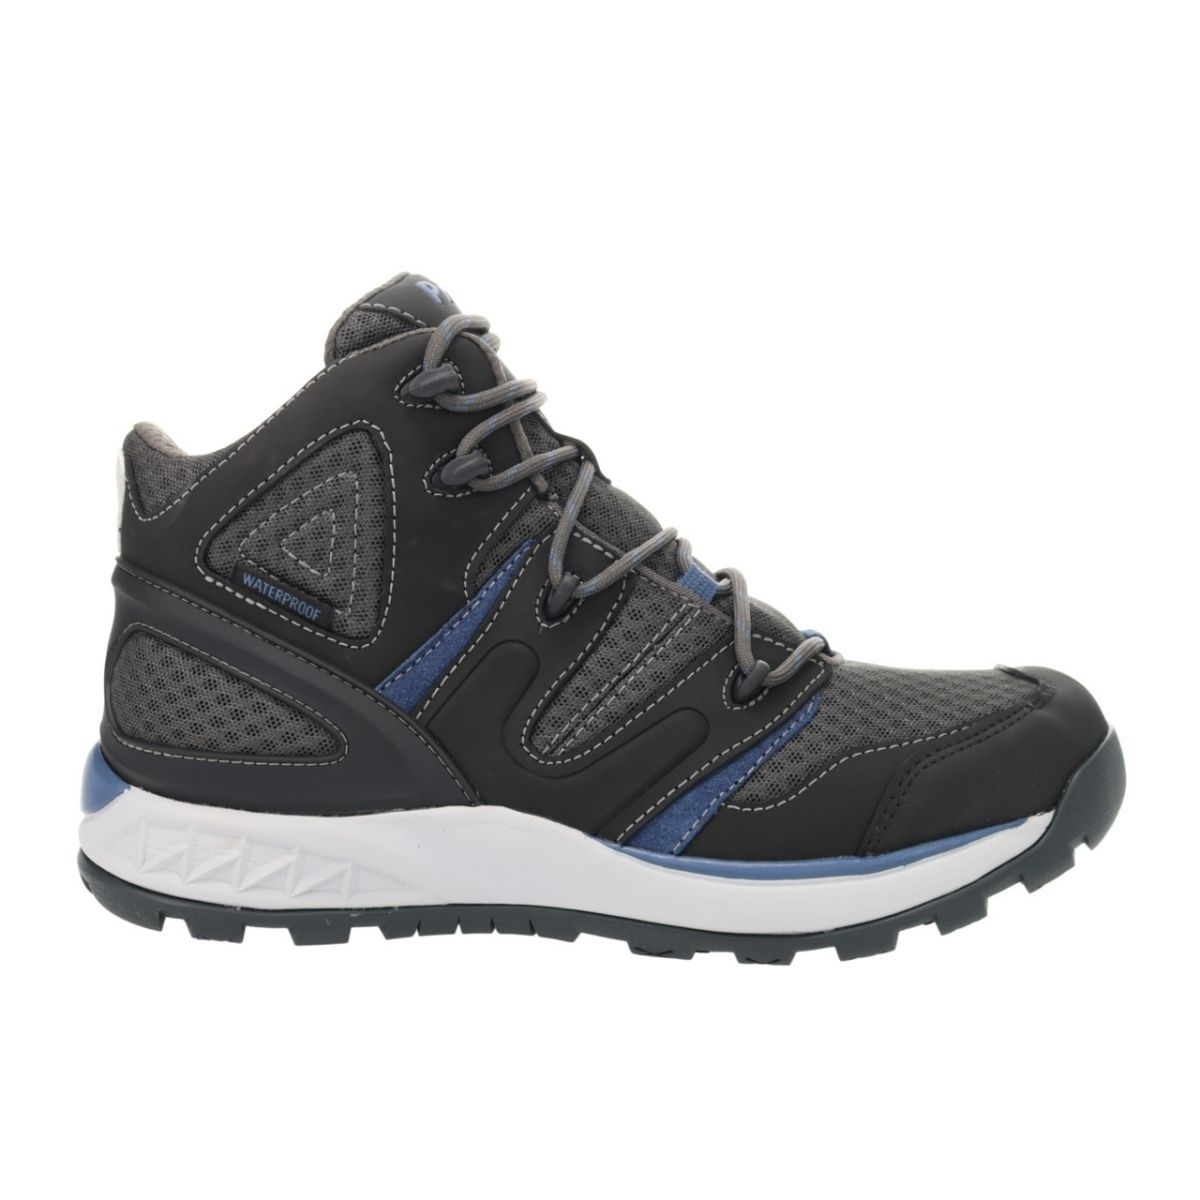 Propet Men's Veymont Waterproof Hiking Boot Grey/Blue - MOA022SGRB GREY/BLUE - GREY/BLUE, 9 XX-Wide